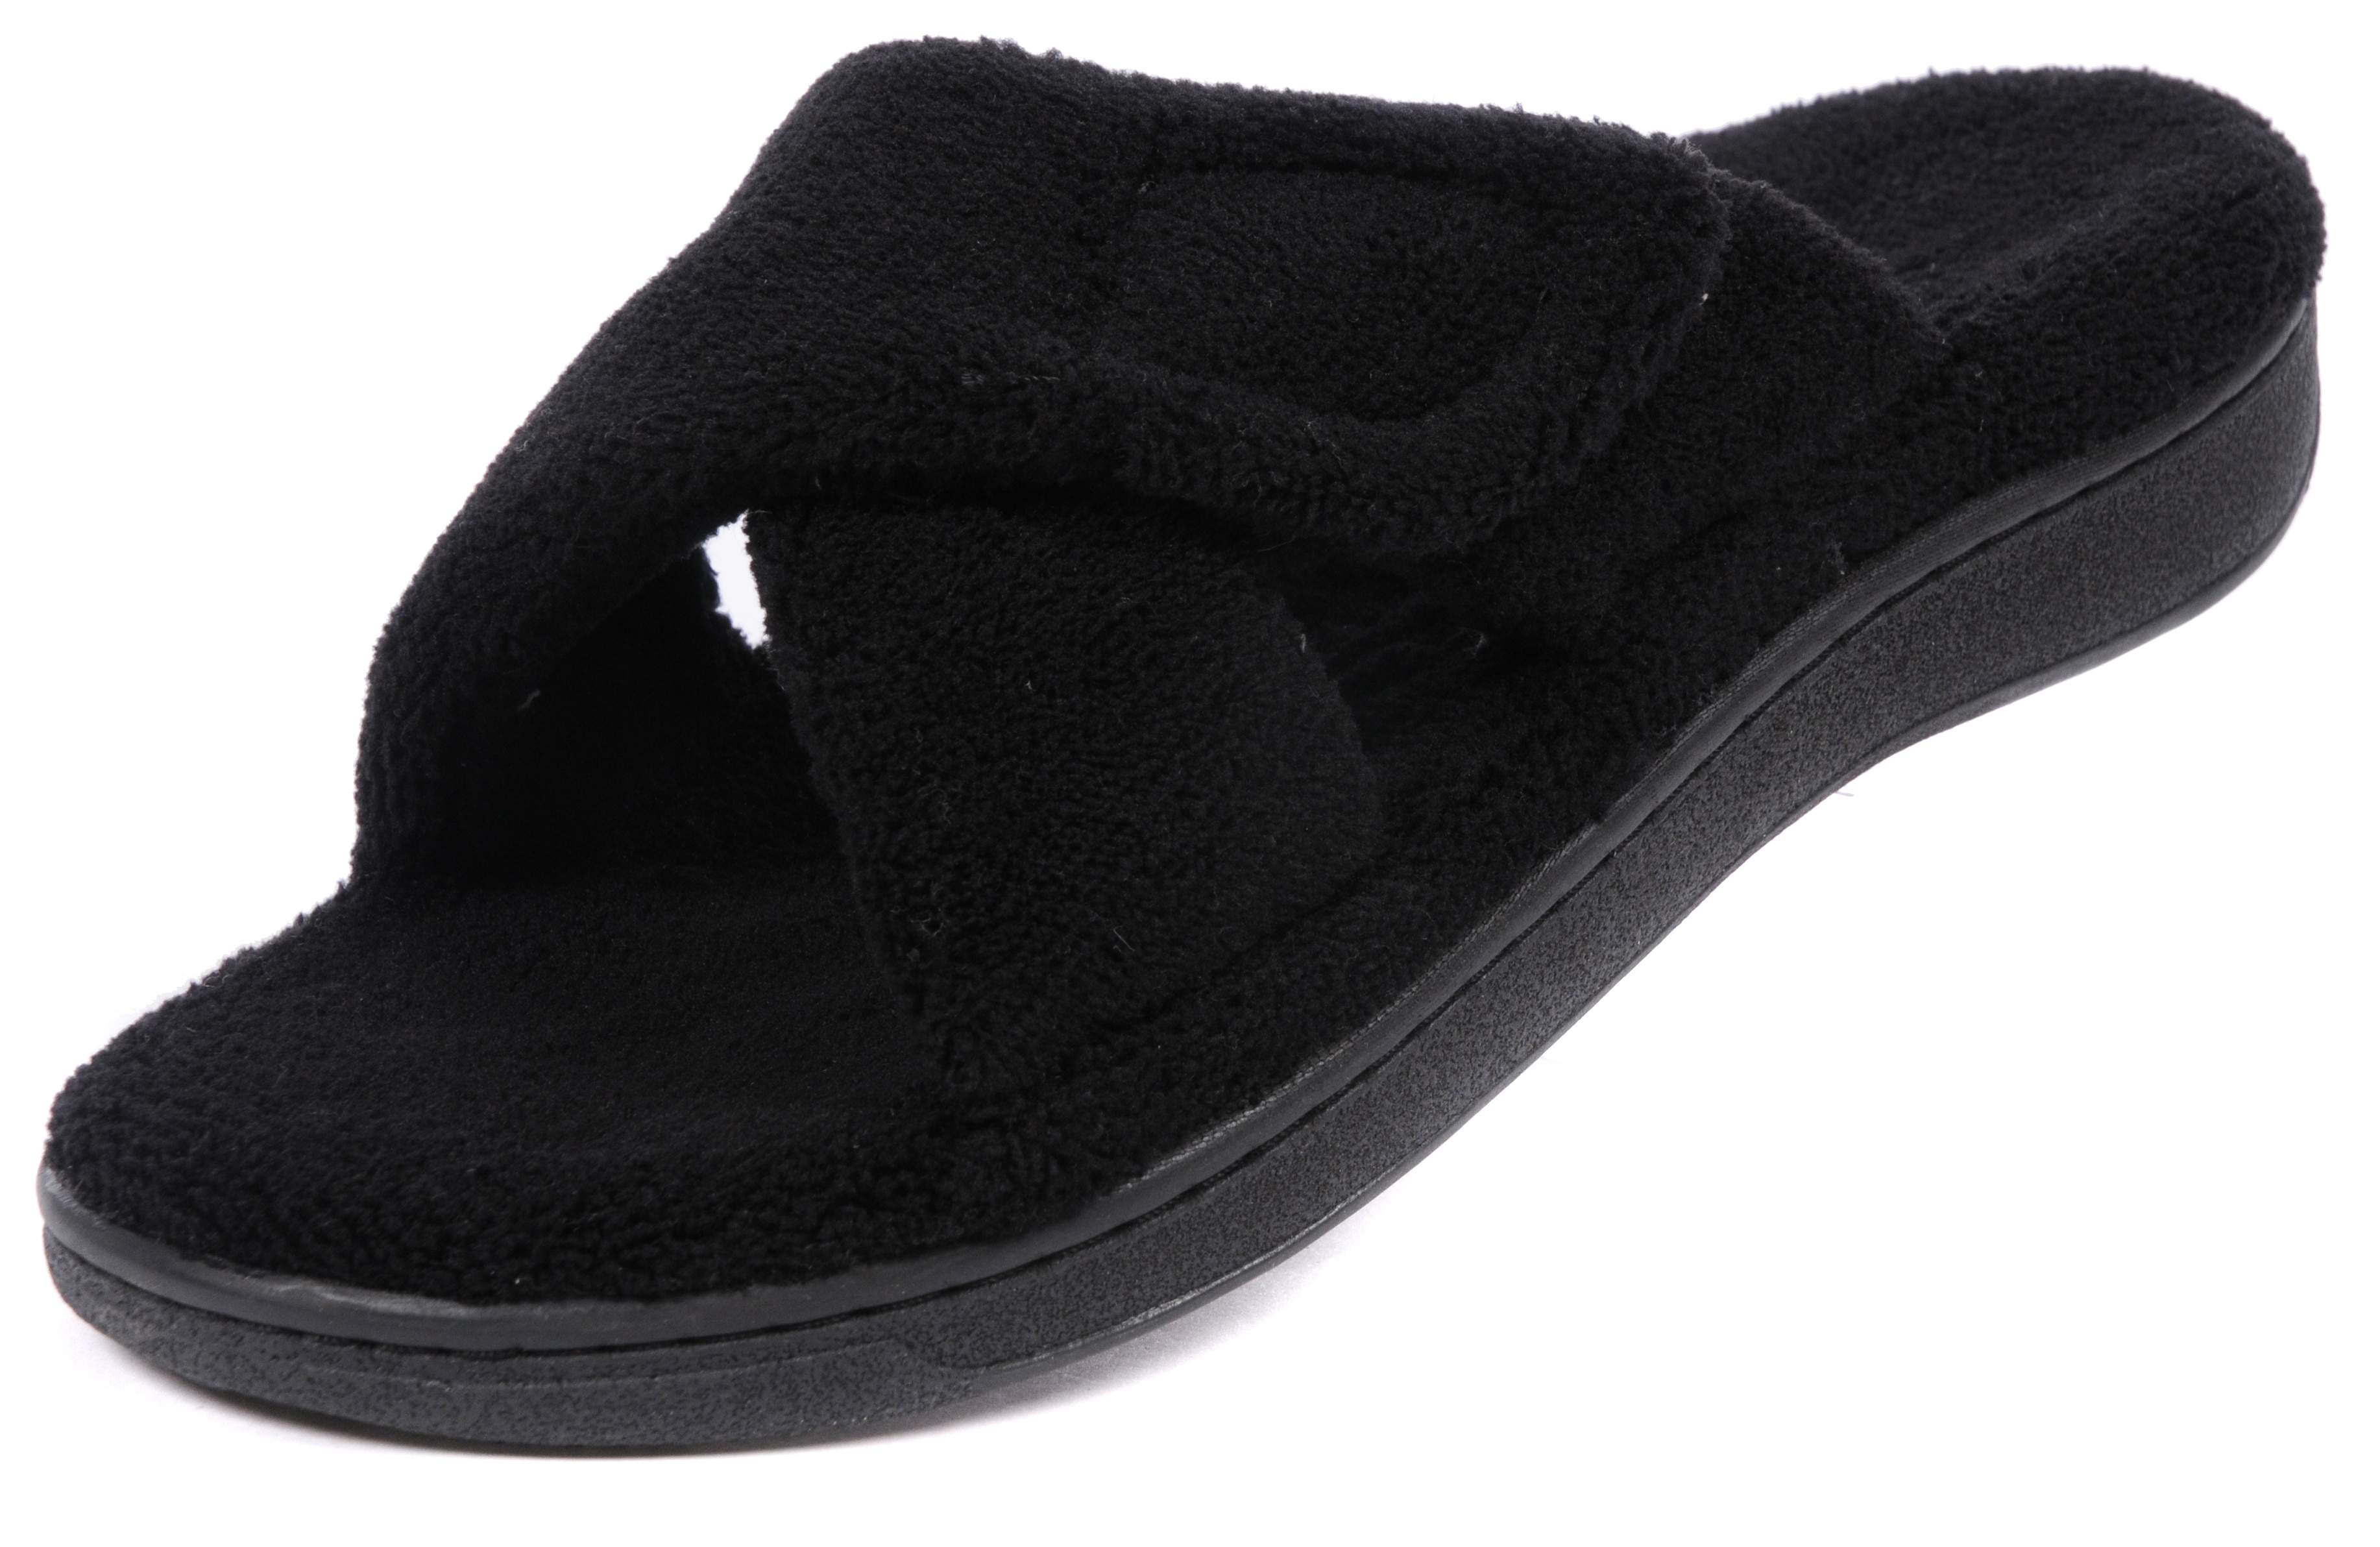 vionic open toe slippers